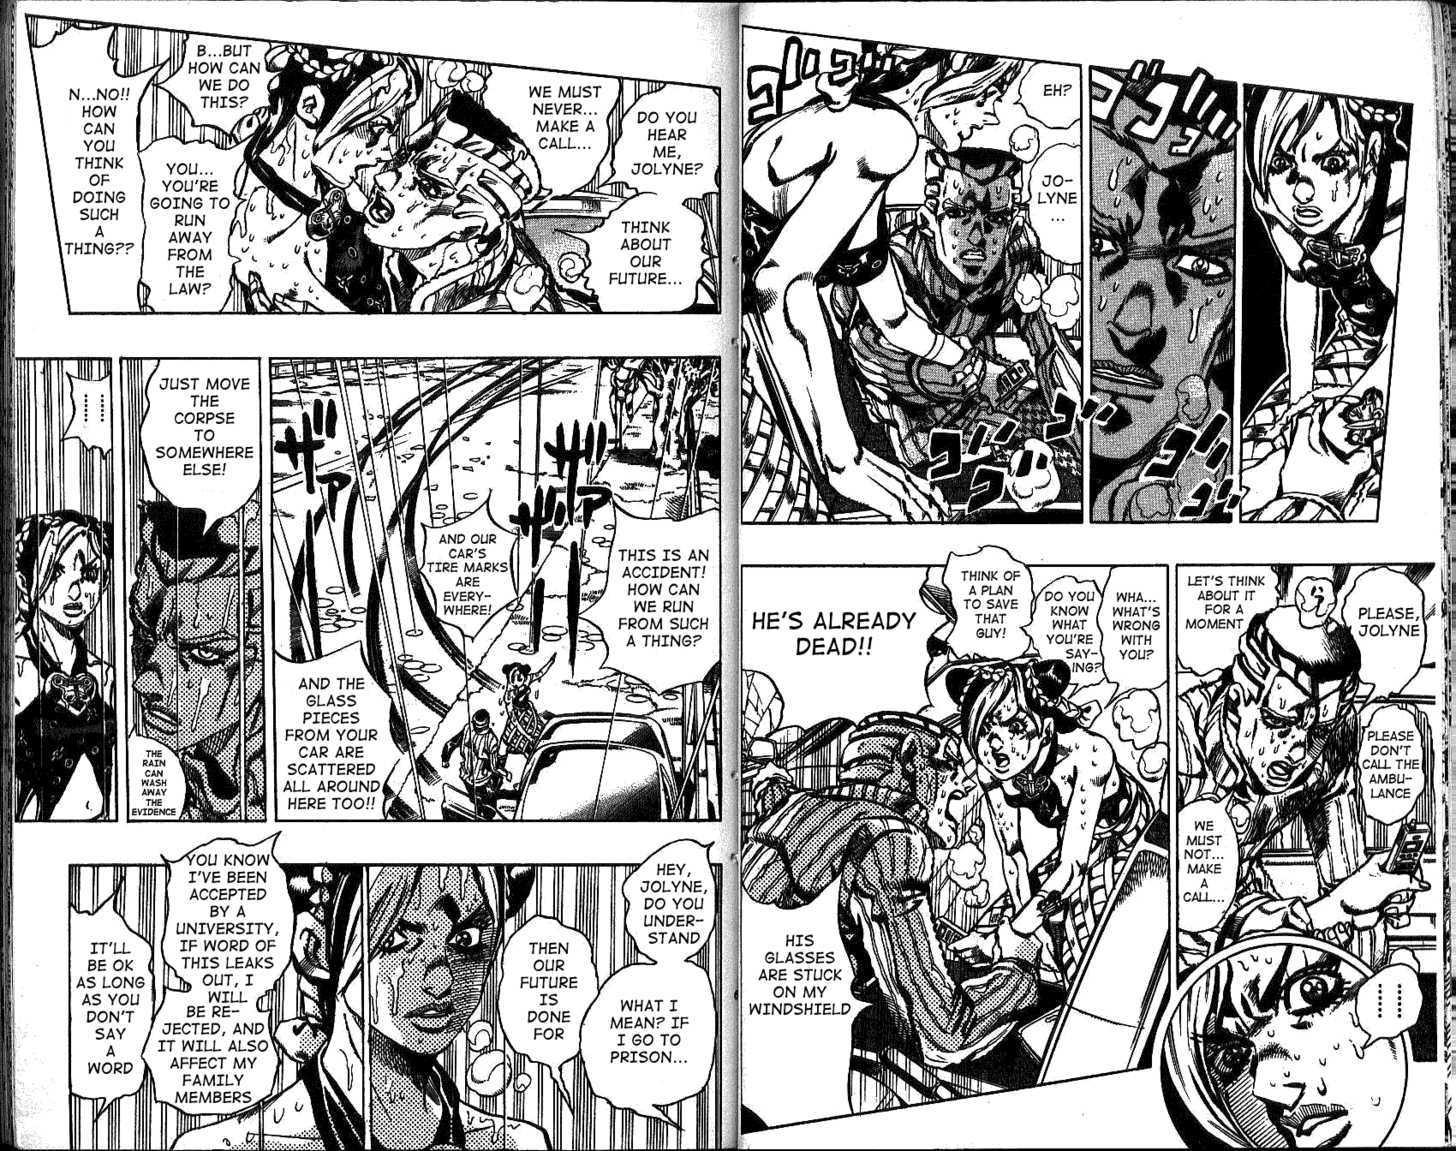 Jojo's Bizarre Adventure Vol.64 Chapter 596 : Stone Ocean (2) page 6 - 